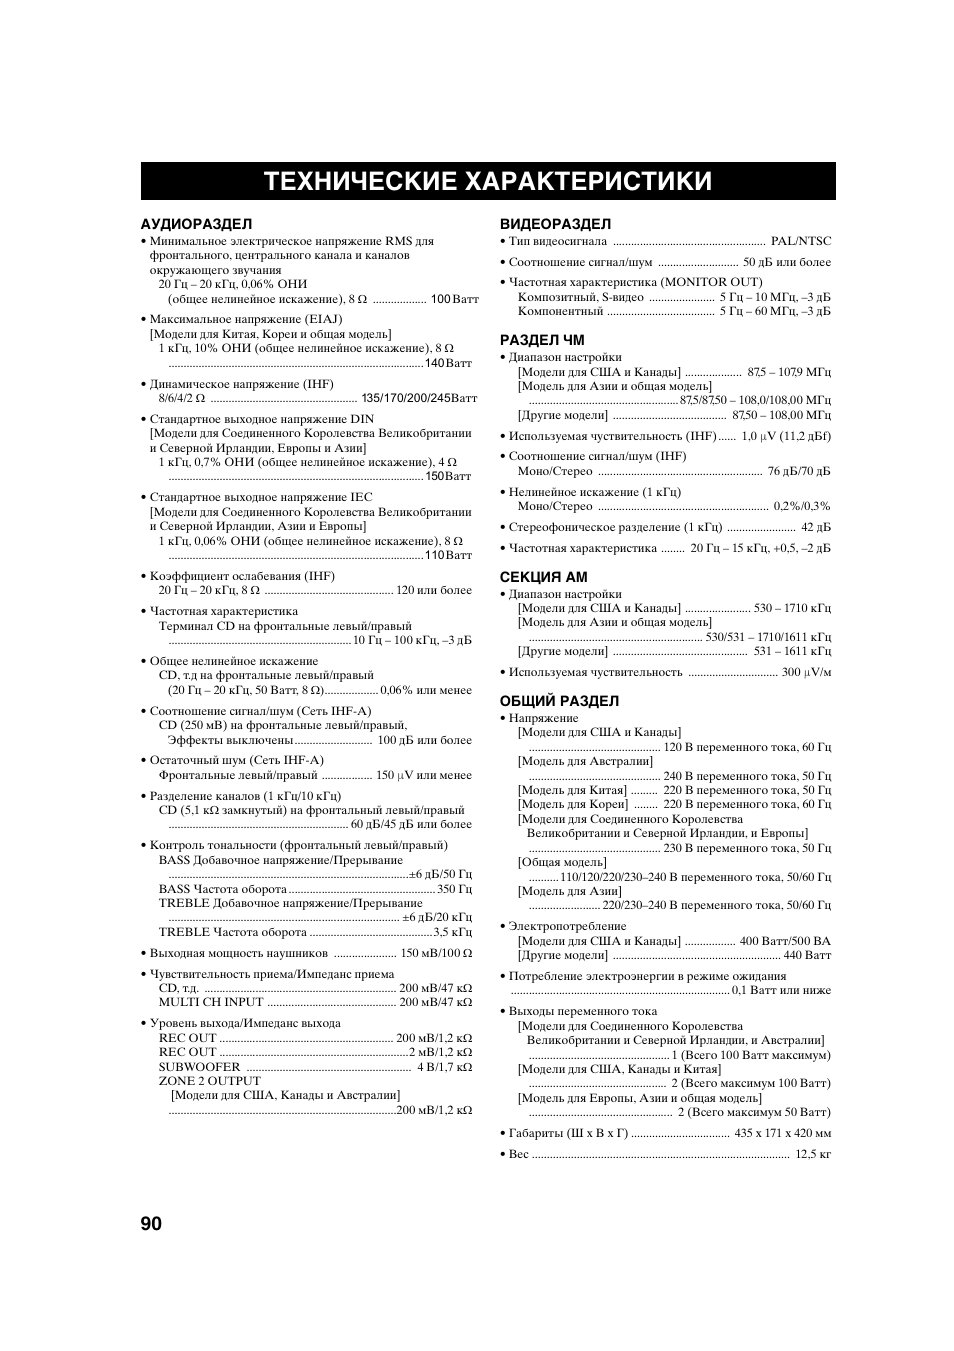 Технические характеристики | Инструкция по эксплуатации Yamaha RX-V757 | Страница 93 / 93